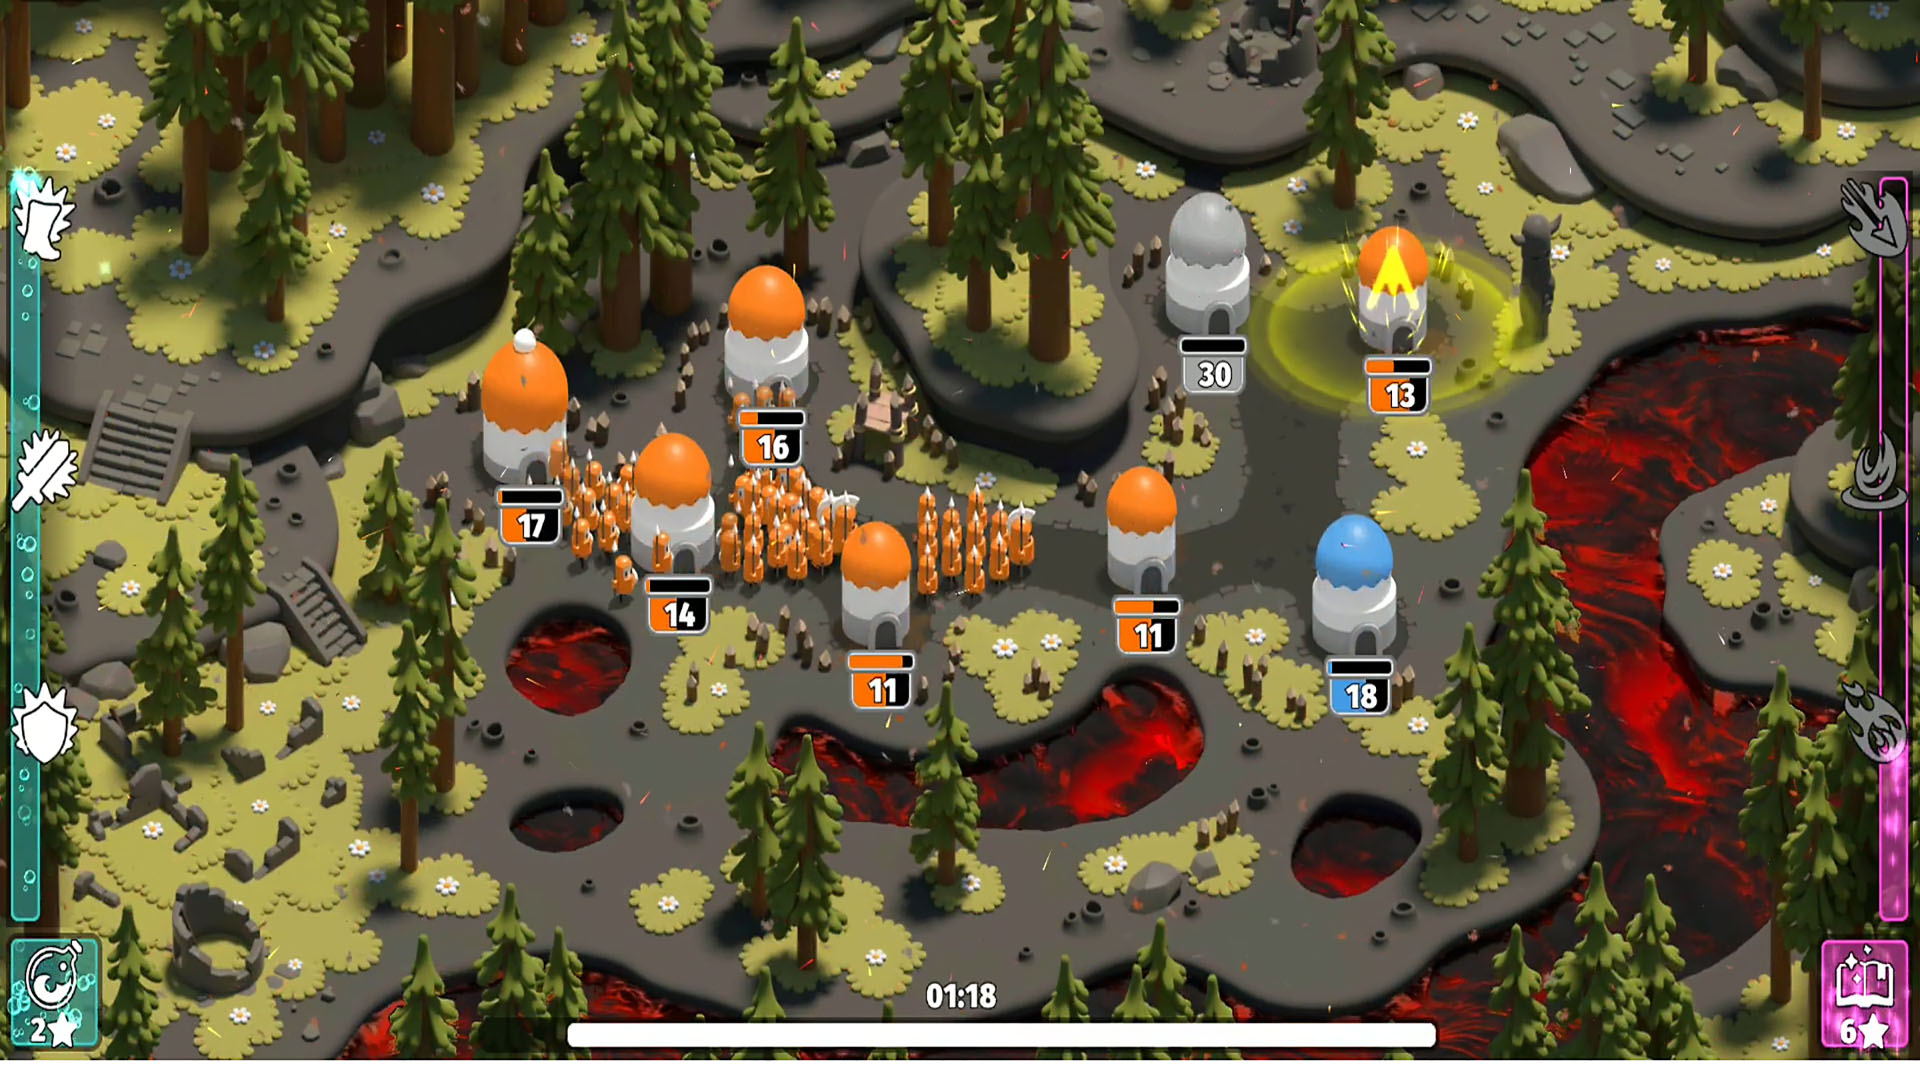 BattleTime 2 - Real Time Strategy Offline Game screenshot 1